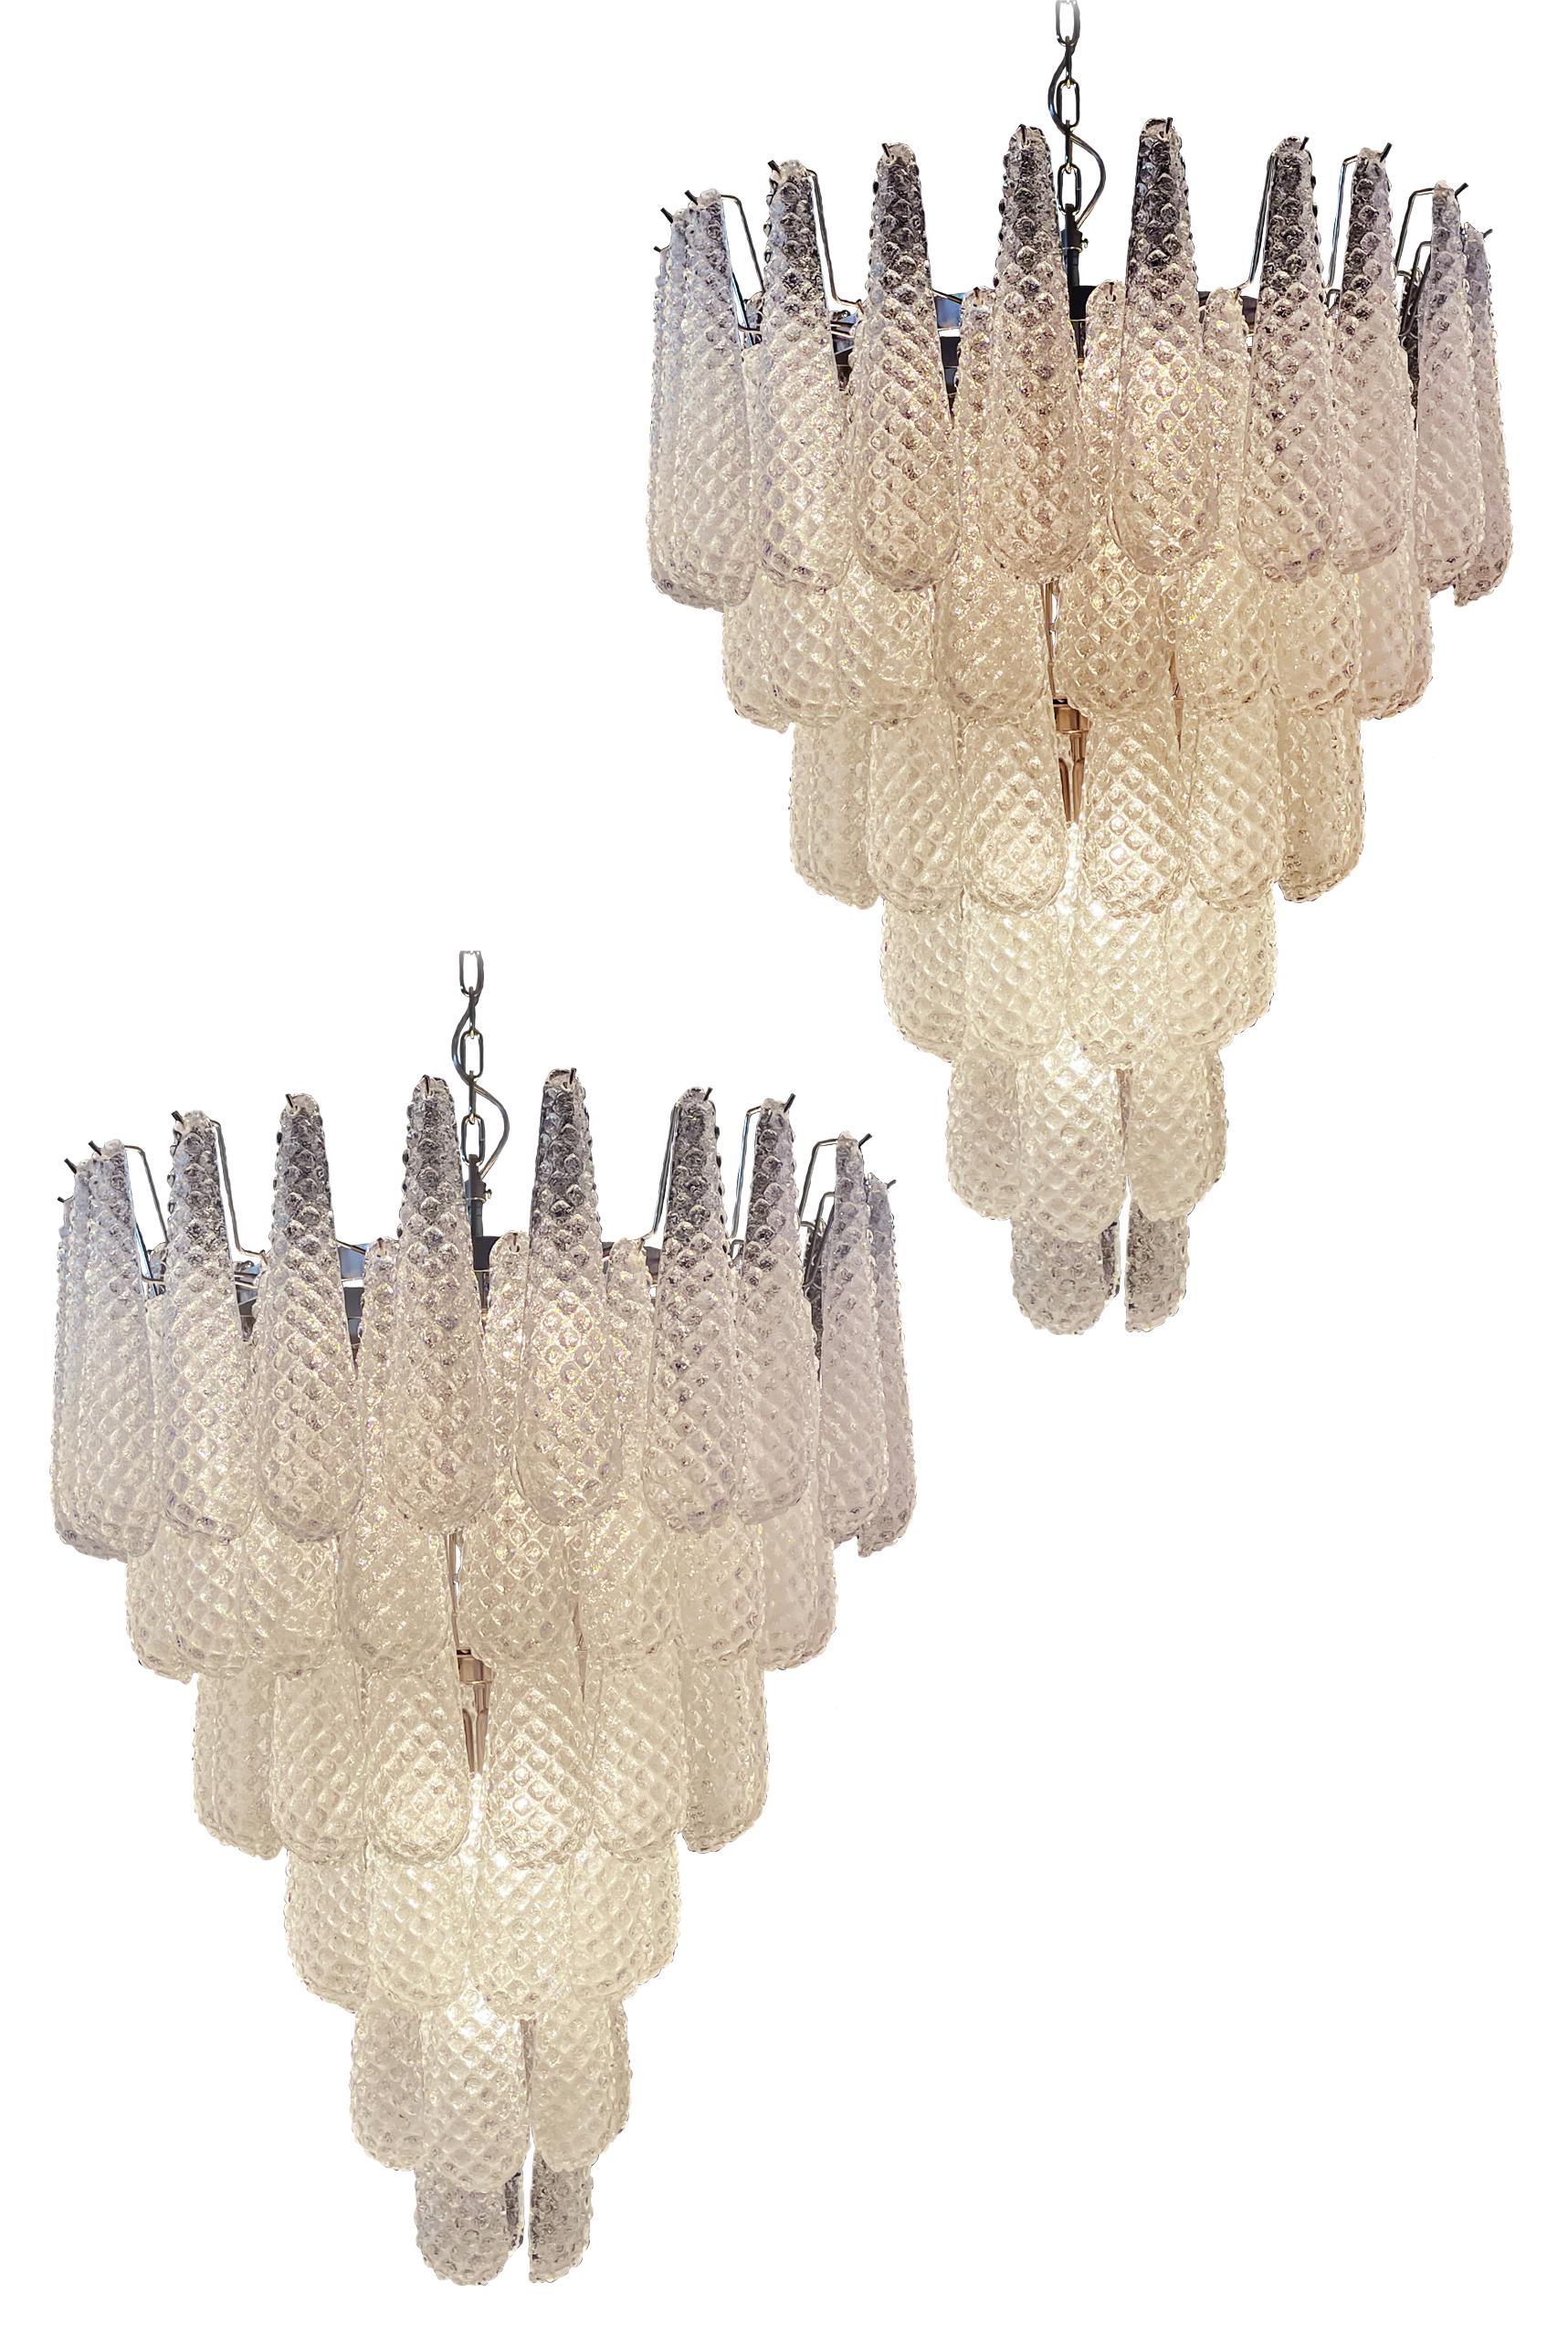 Magnificent Italian vintage Murano glass chandelier - 75 glass petals drop For Sale 10